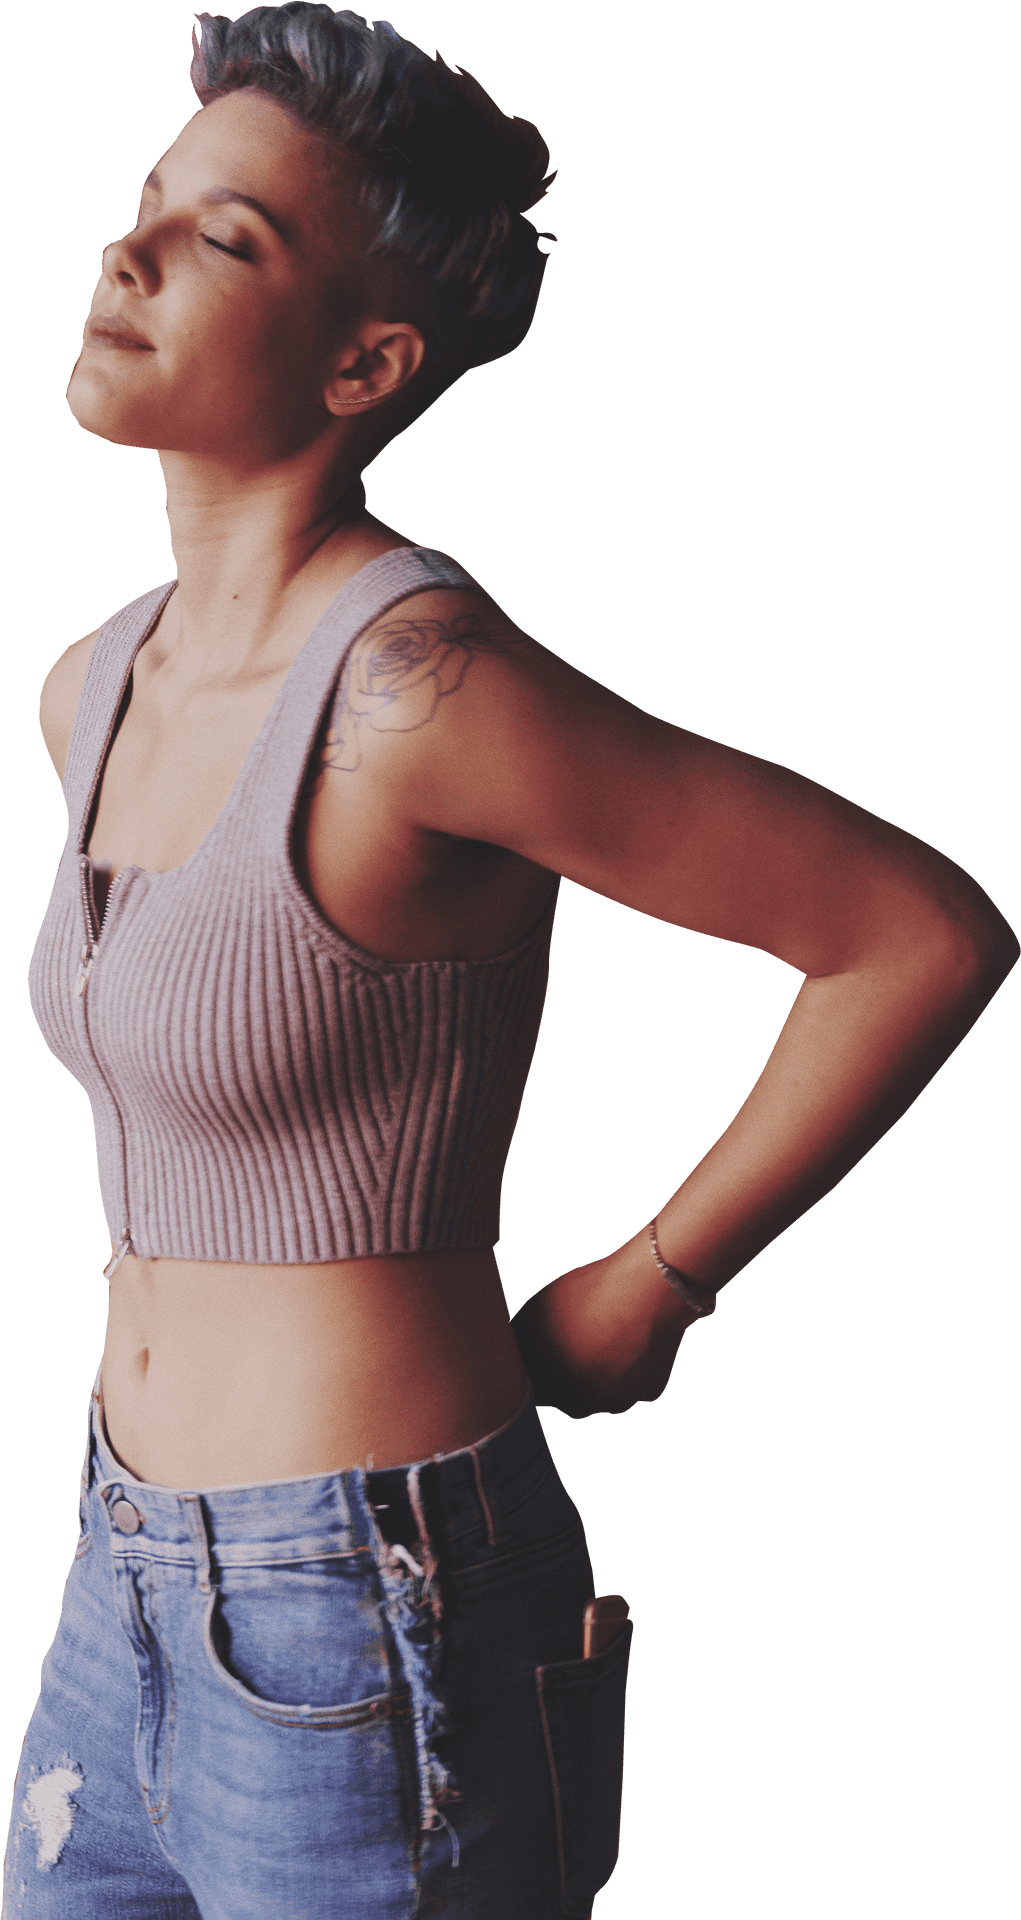 Abella Danger Muscle Pose PNG Image - PurePNG | Free transparent CC0 PNG  Image Library